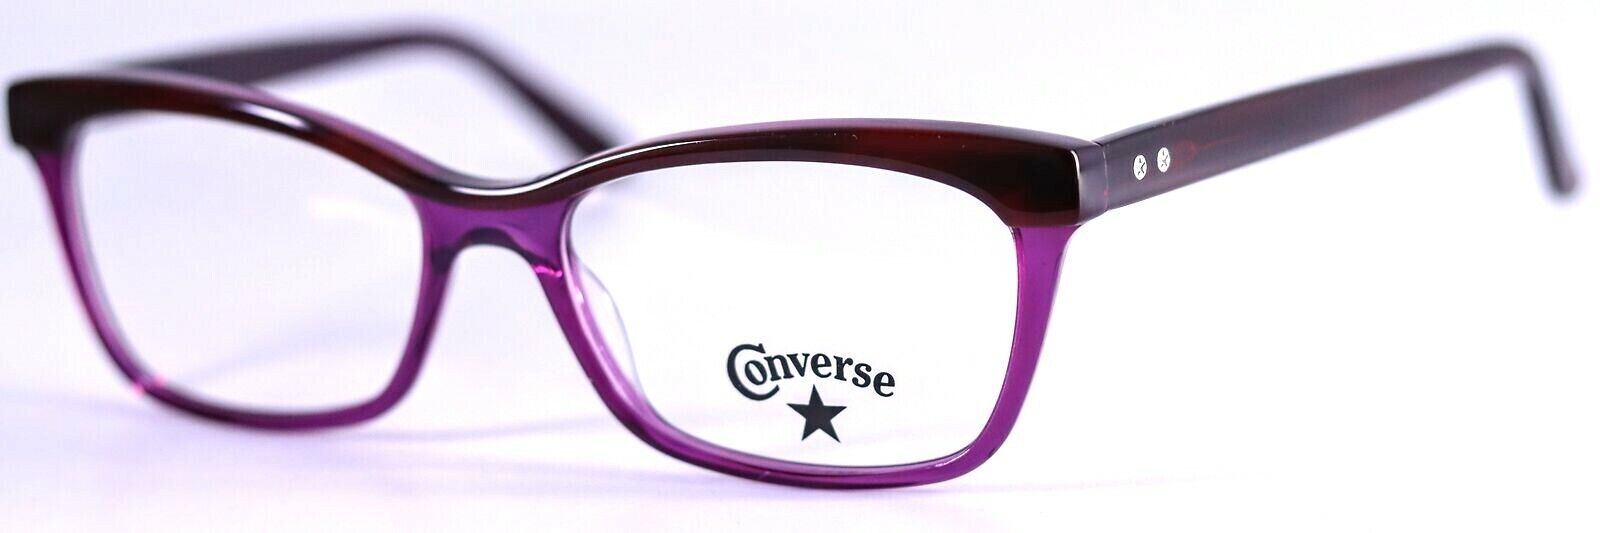 CONVERSE A513 Plum Purple Cat Eye Kids Girls Eyeglasses Frames 51-16-140 + CASE